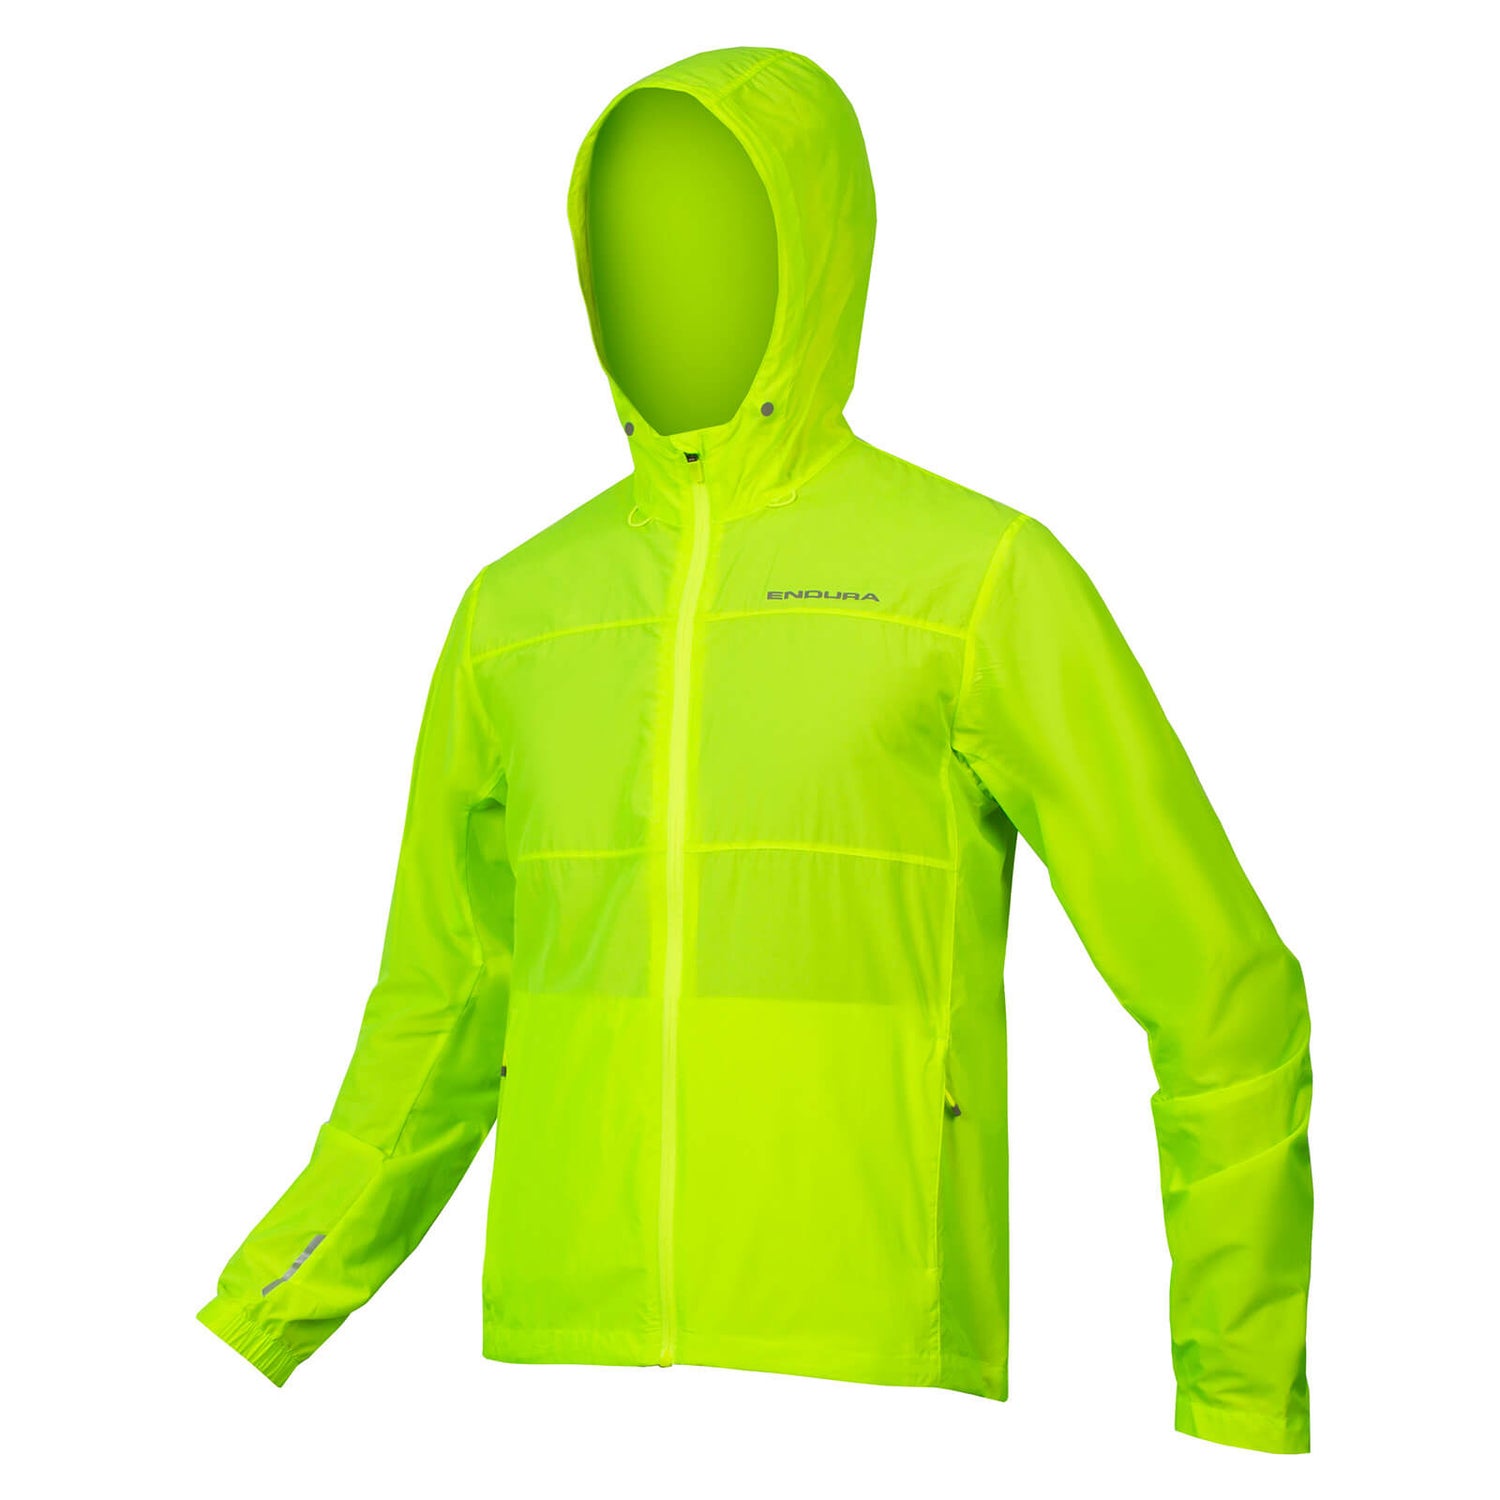 Men's Hummvee Windproof Shell Jacket - Hi-Viz Yellow - XXXL